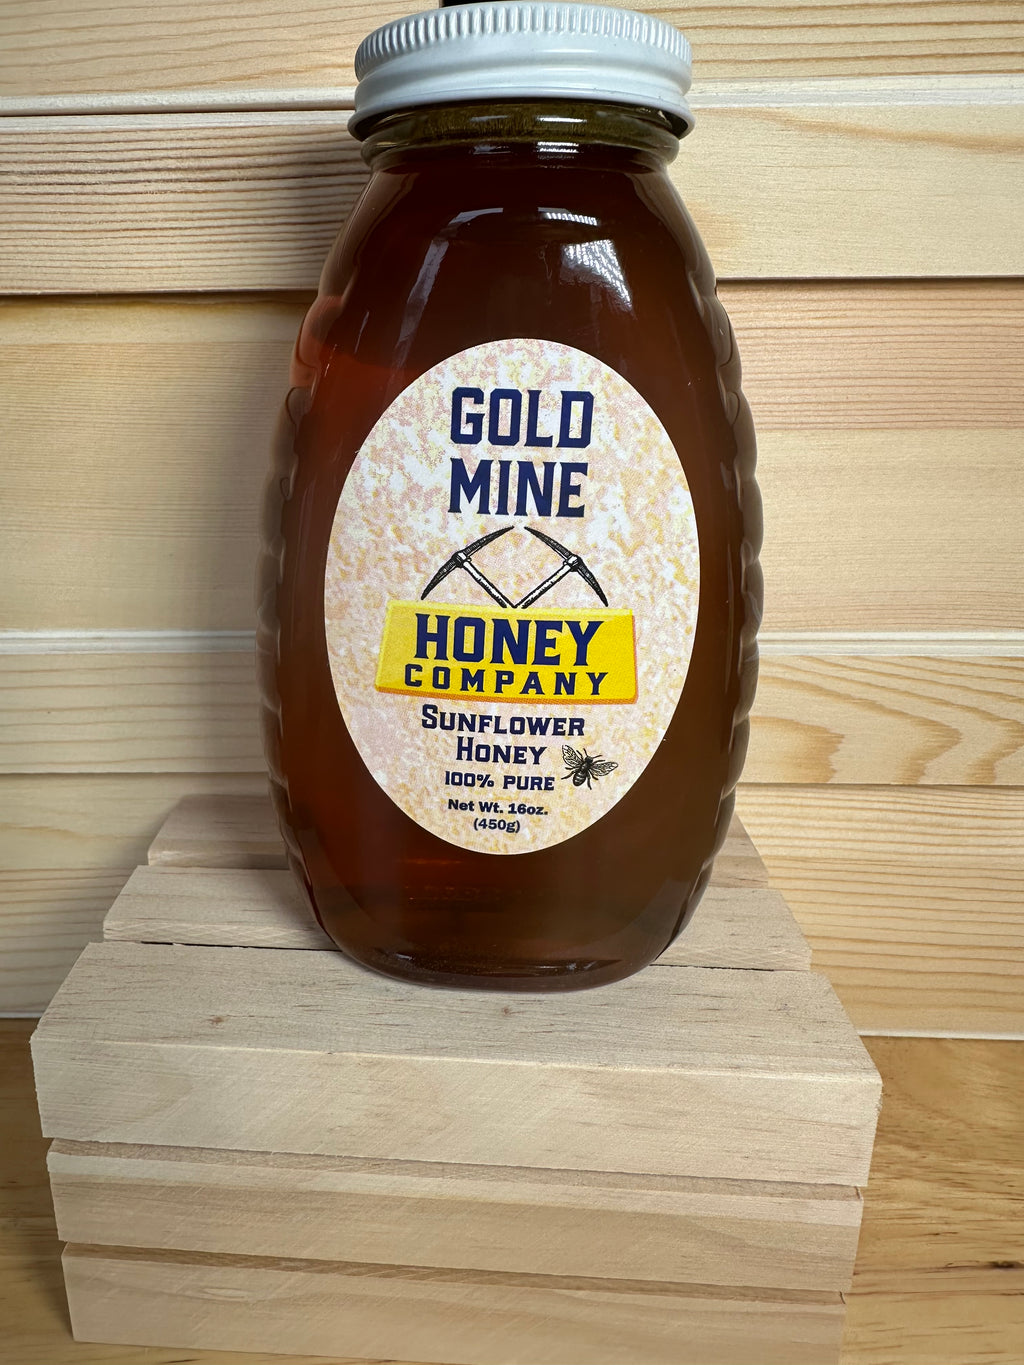 Sunflower Honey - gold mine honey company